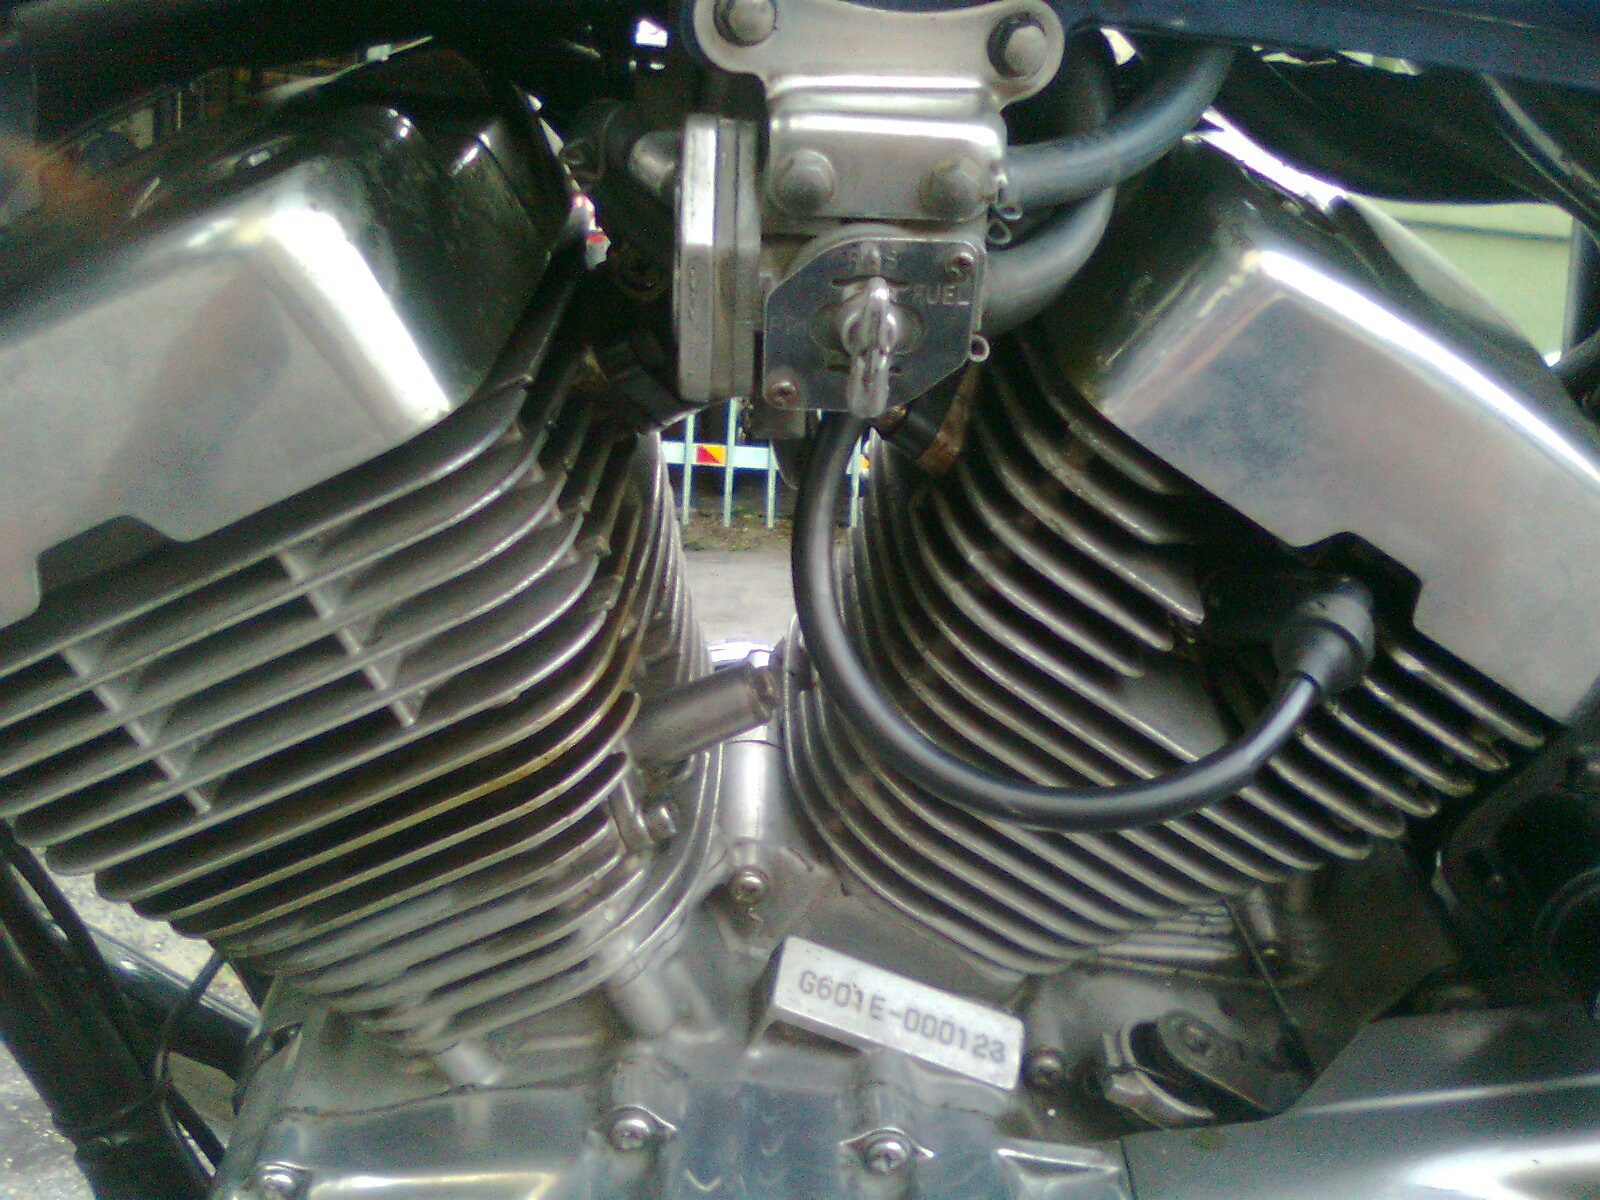 v twin engine